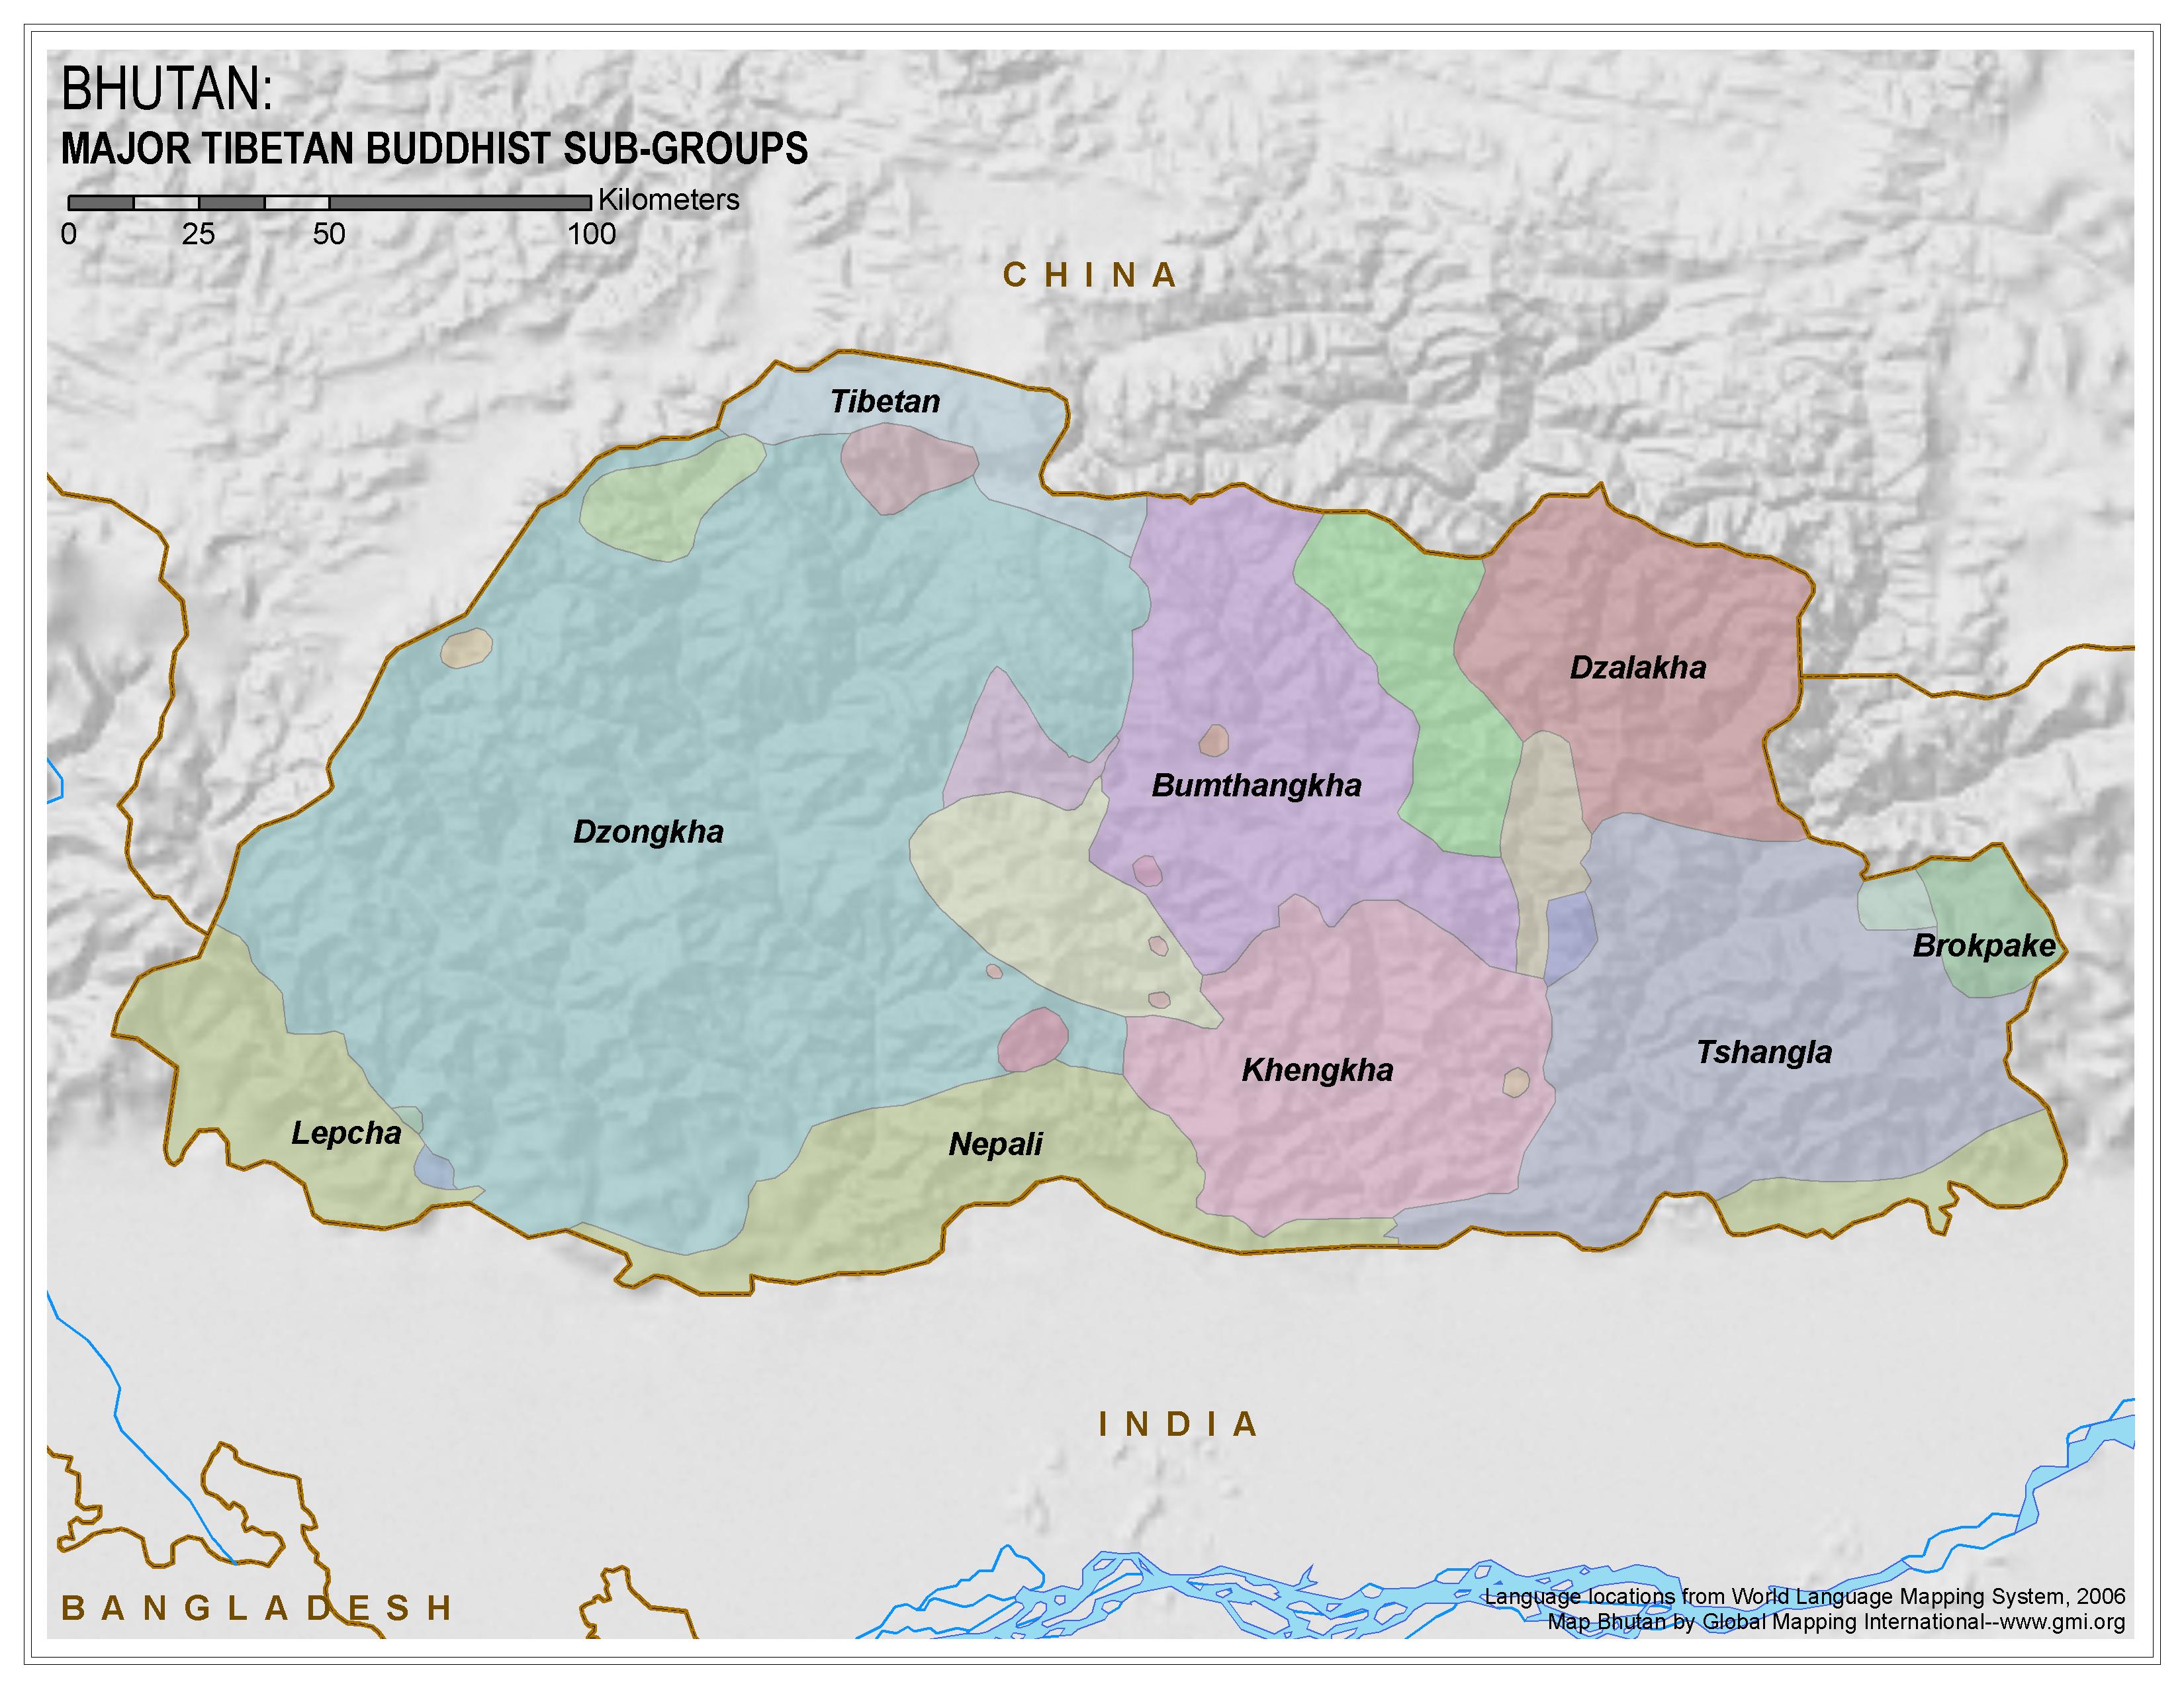 Bhutan: Major Tibetan Buddhist Sub-Groups